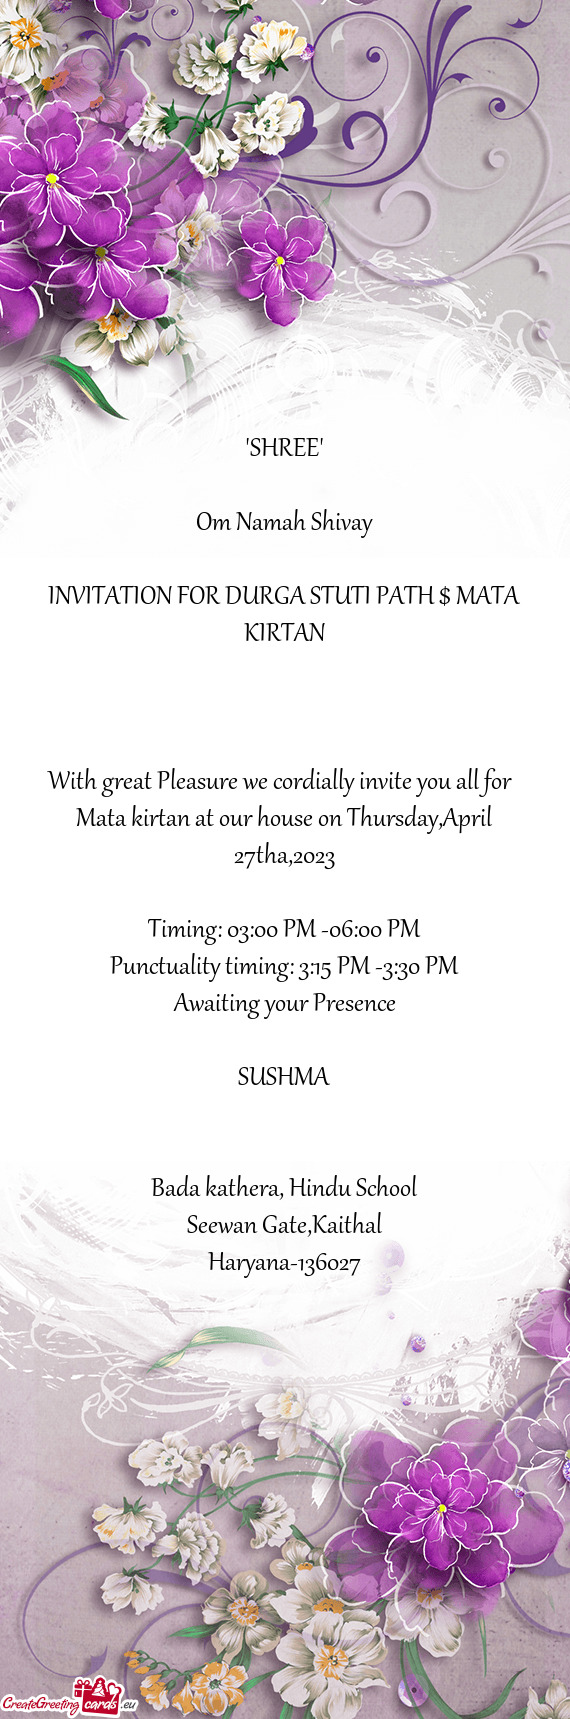 Mata kirtan at our house on Thursday,April 27tha,2023